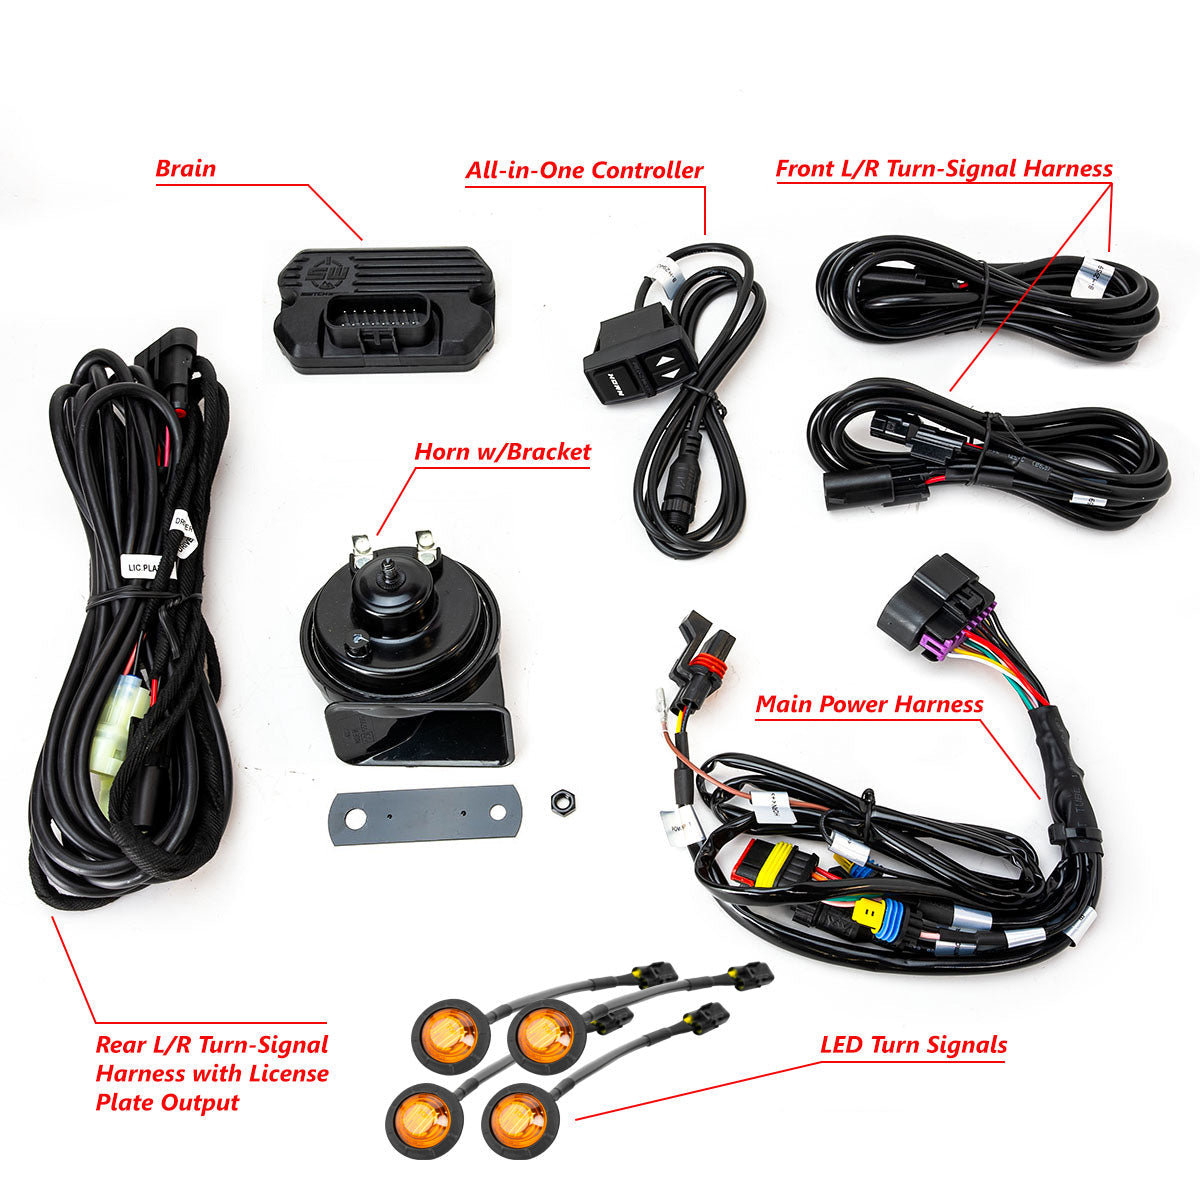 Tango2 Universal Turn-Signal Kit | Switch Works